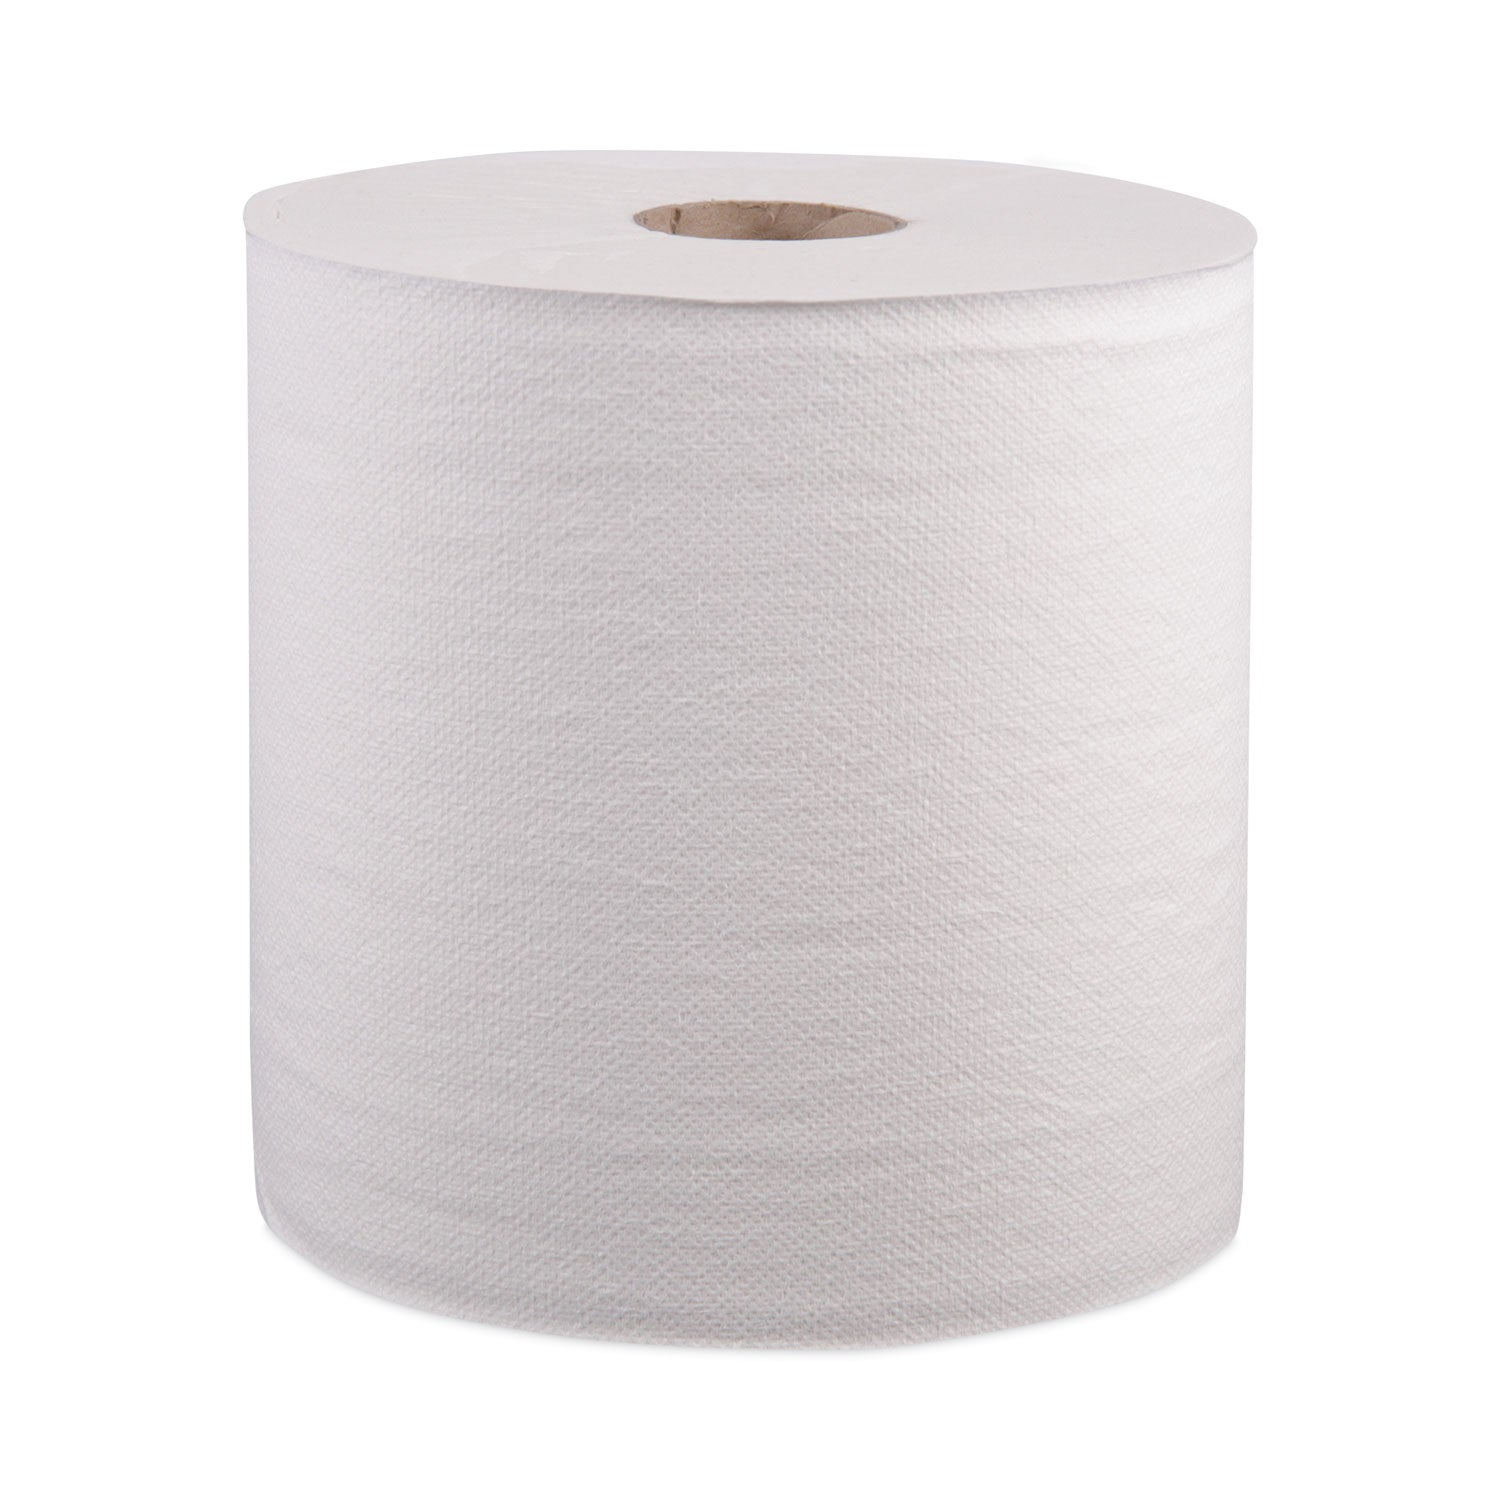 hardwound-roll-towels-1-ply-8-x-800-ft-white-6-rolls-carton_win12906b - 1